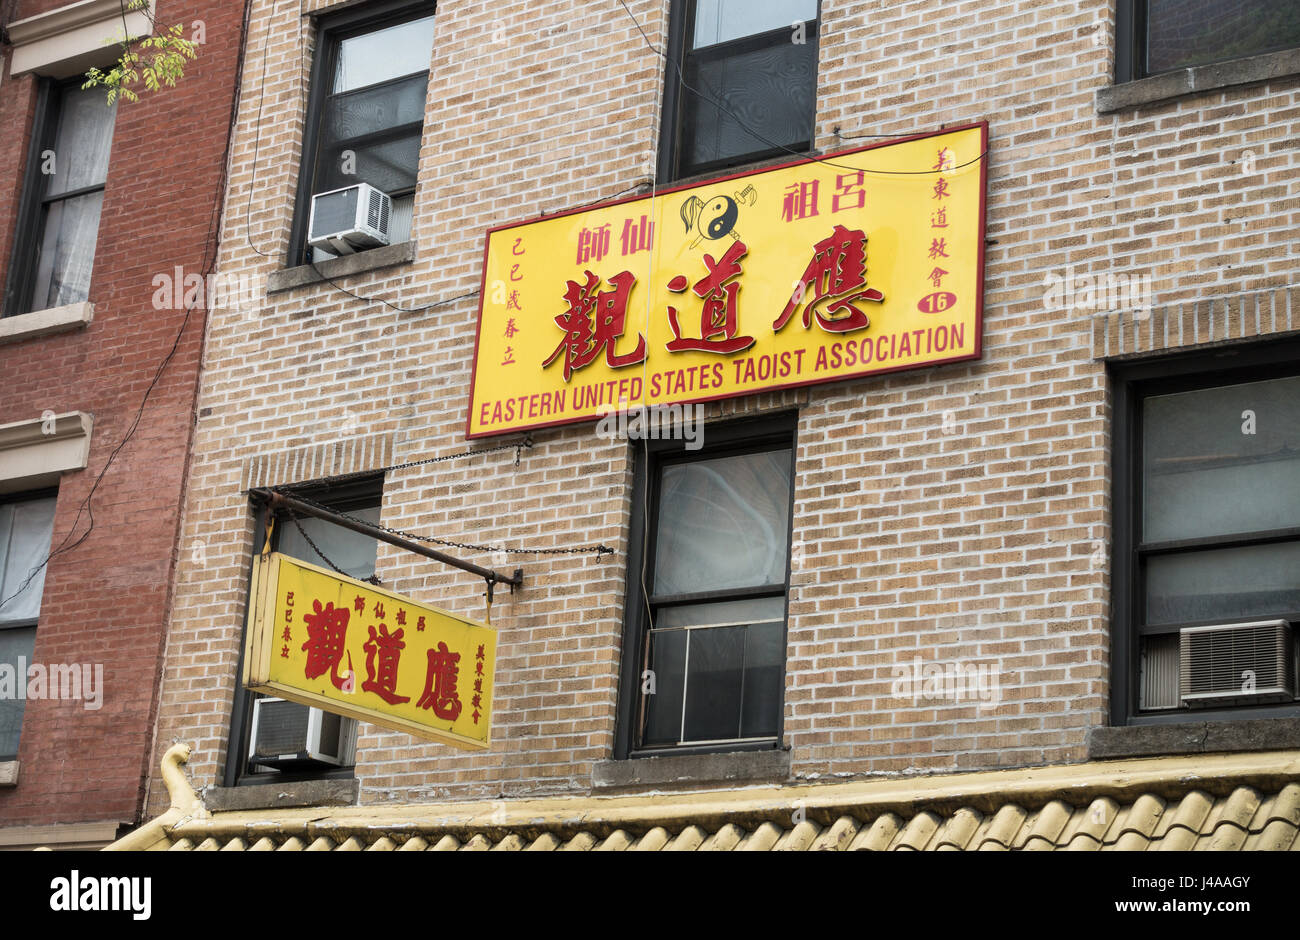 Eastern United States Taoist Association in Nolita, New York City Stock Photo